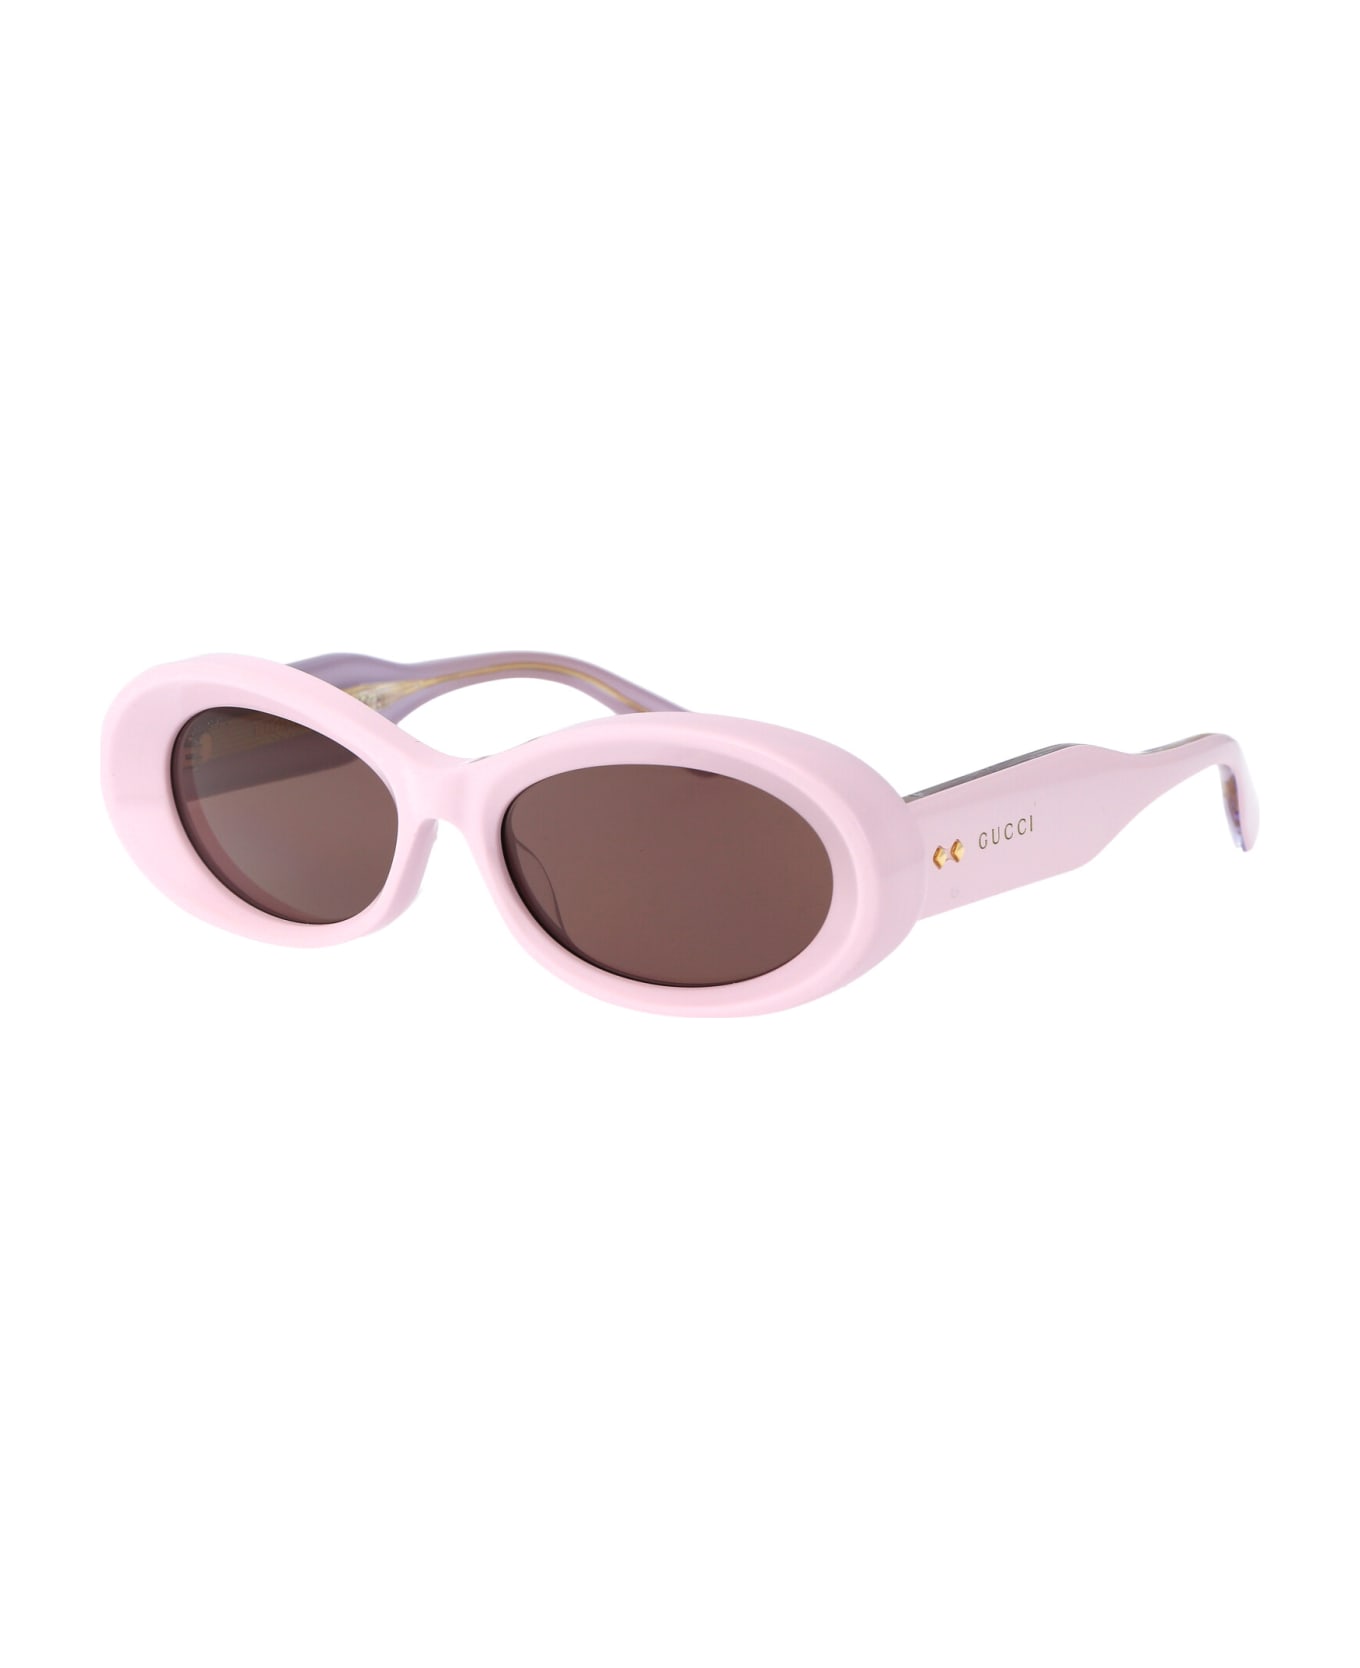 Gucci Eyewear Gg1527s Sunglasses - 003 PINK PINK BROWN